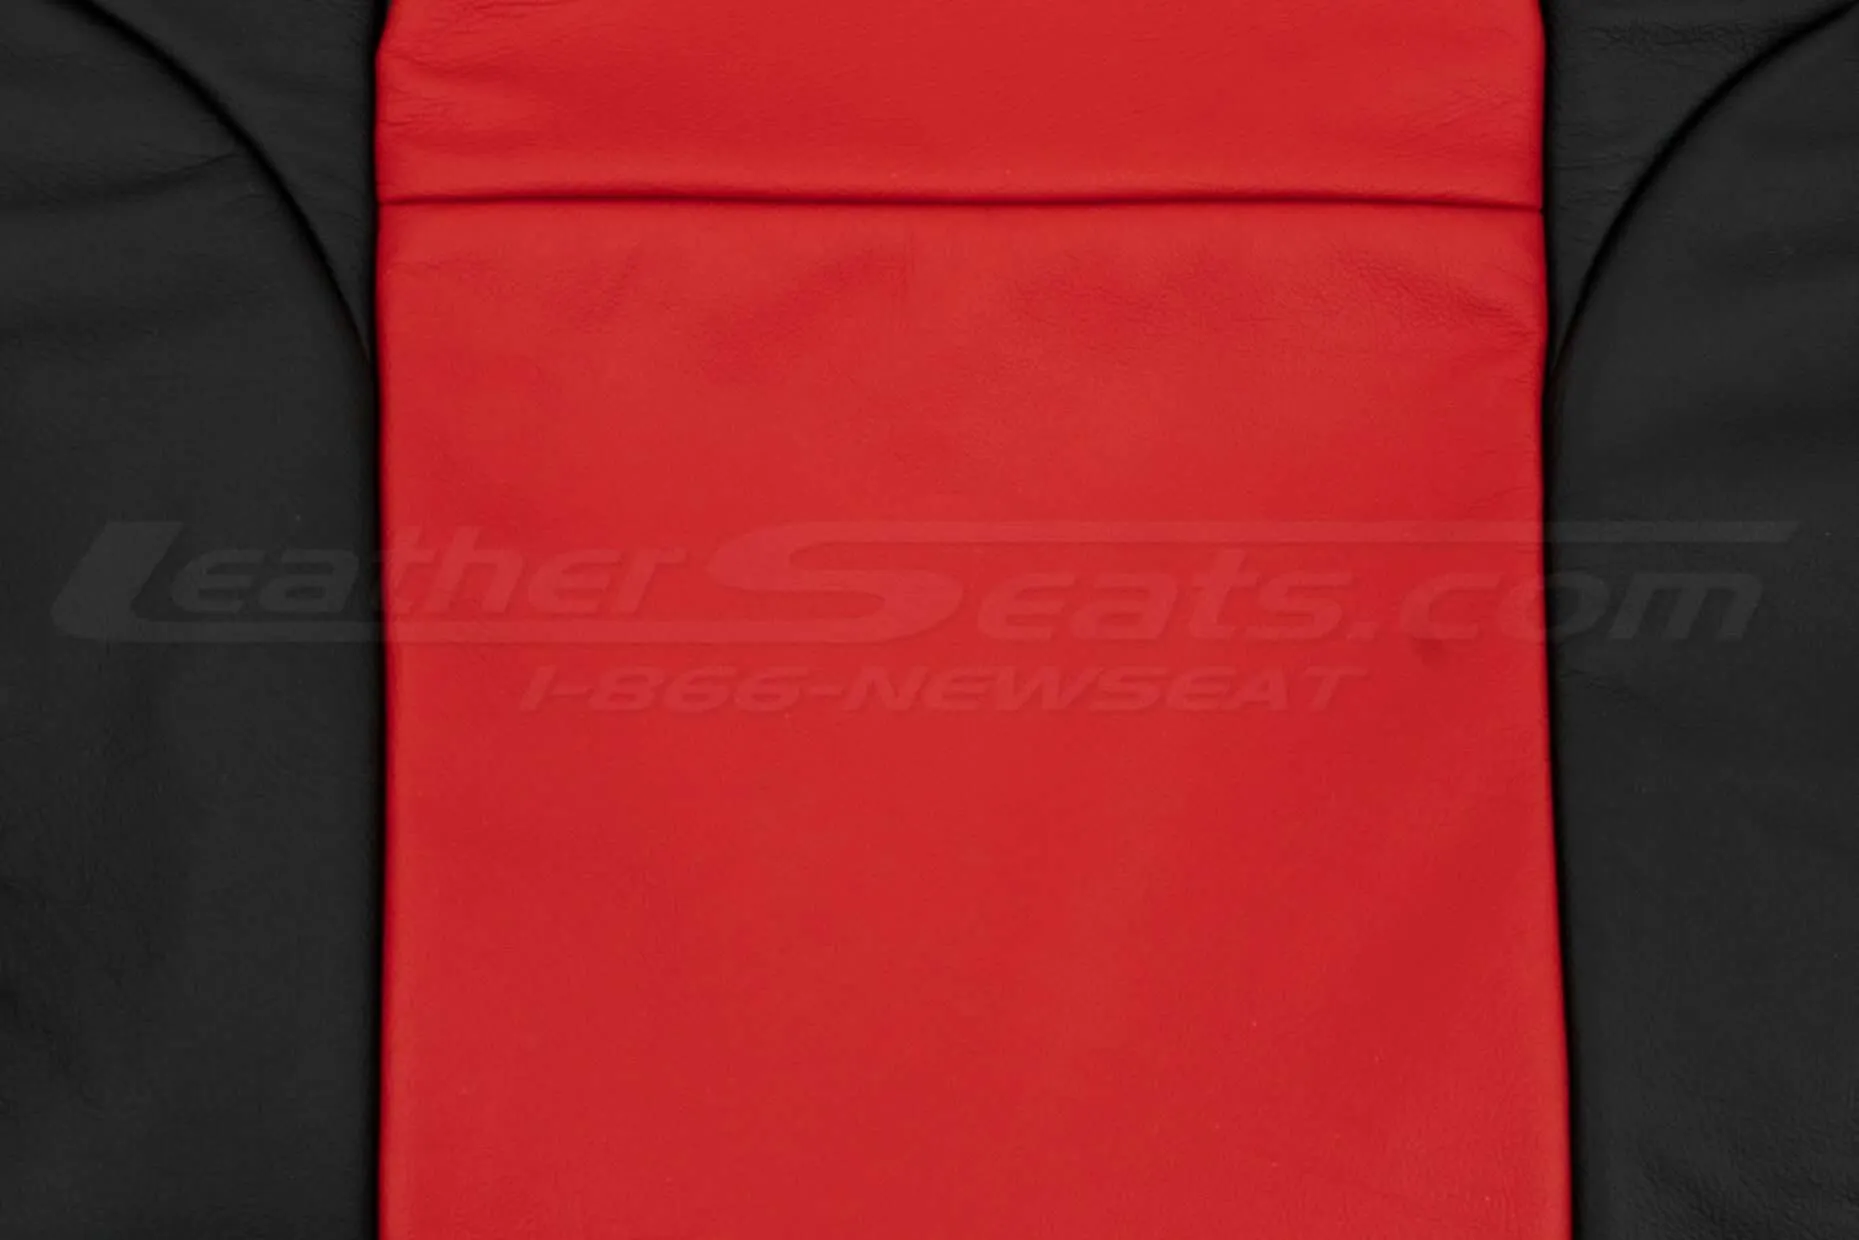 04-06 Pontiac GTO Leather Kit - Black & Bright Red - Backrest insert close-up